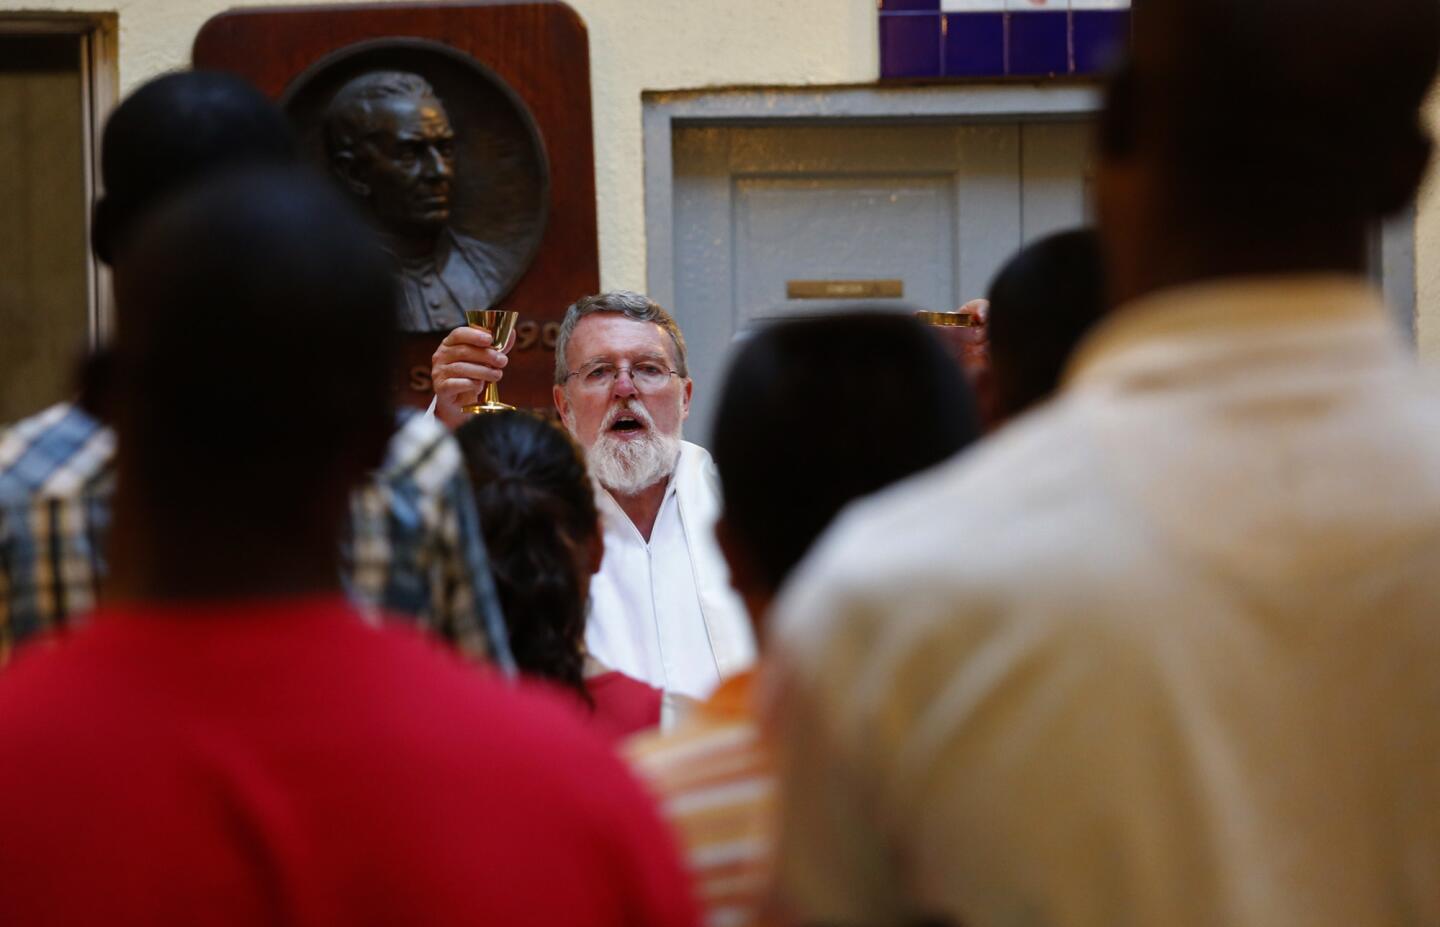 Father Patrick Murphy celebratesMass at the Casa del Migrante shelter in Tijuana, Mexico.